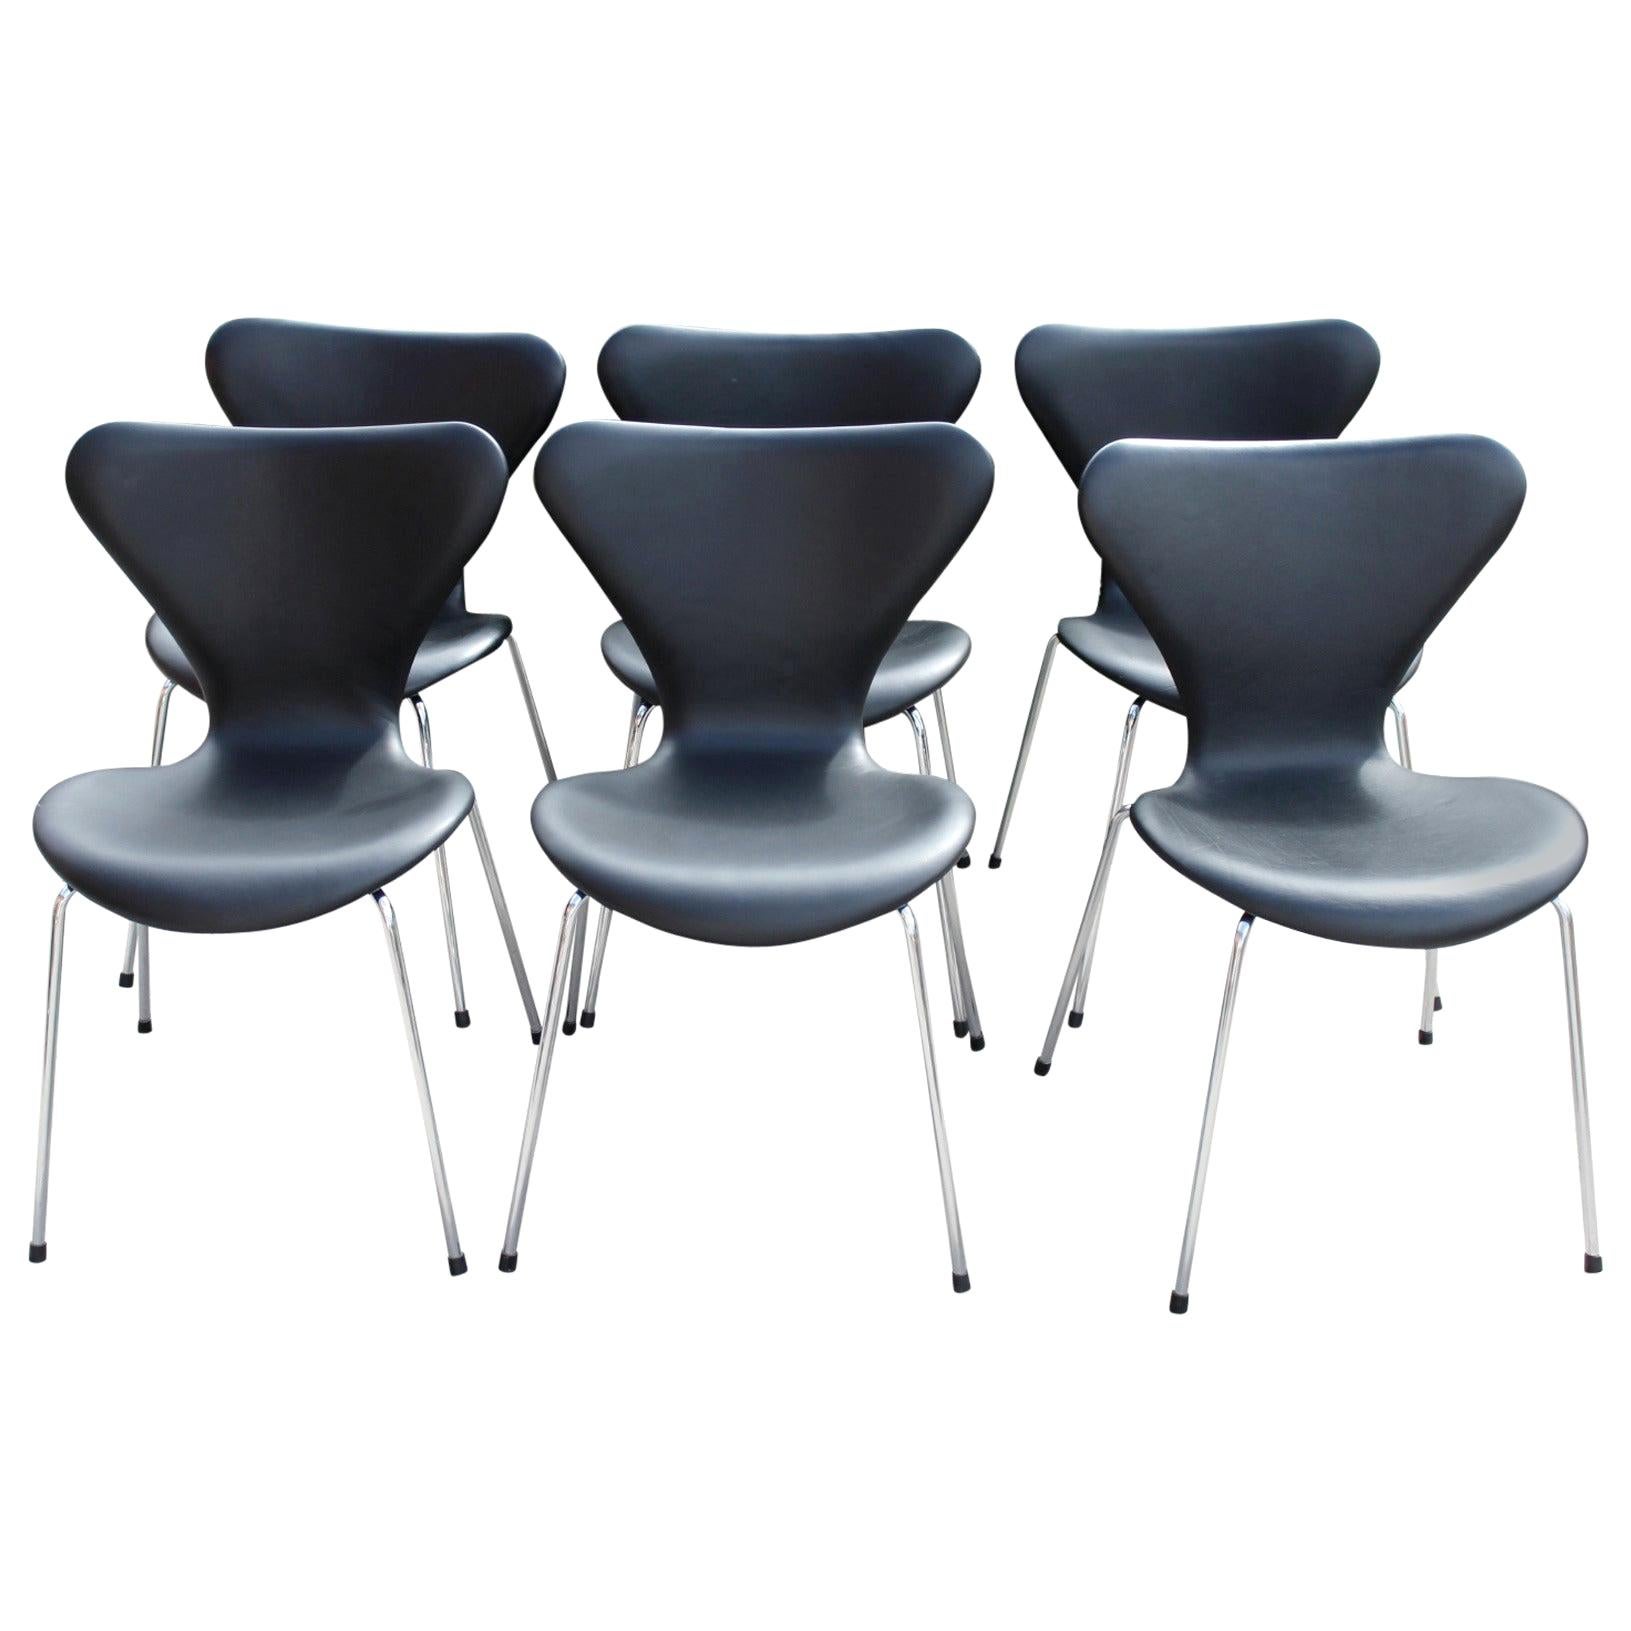 Six Arne Jacobsen Chairs by Fritz Hansen, Black Leather, Model 3107